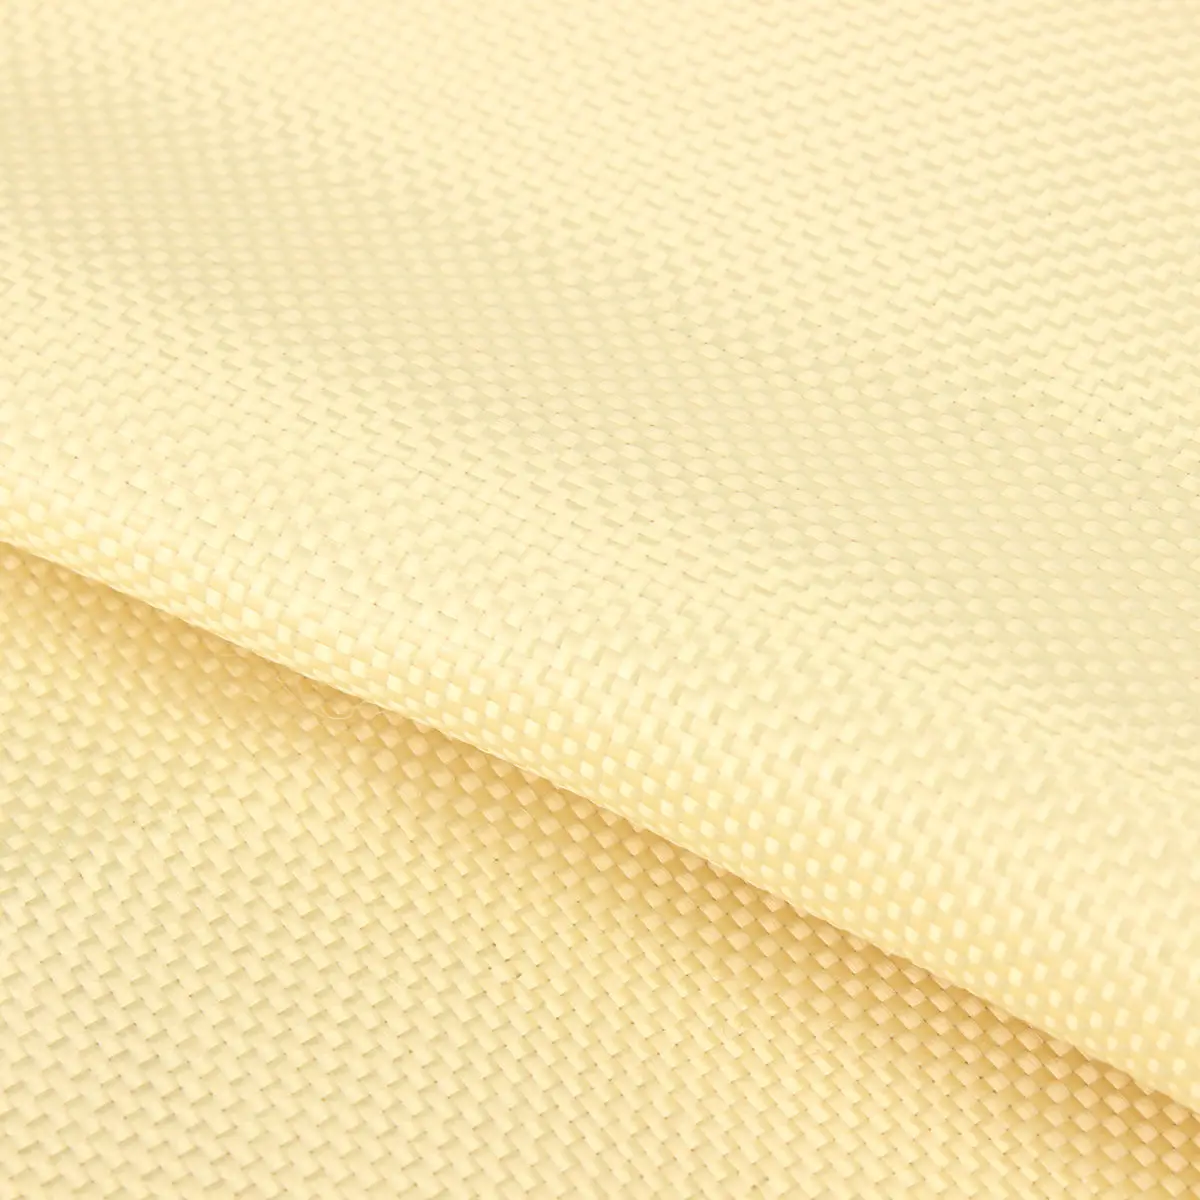 JX-LCLYL 100cm*30cm 200gsm Kevlar Fabric Woven Aramid Fiber Cloth Plain Color Yellow